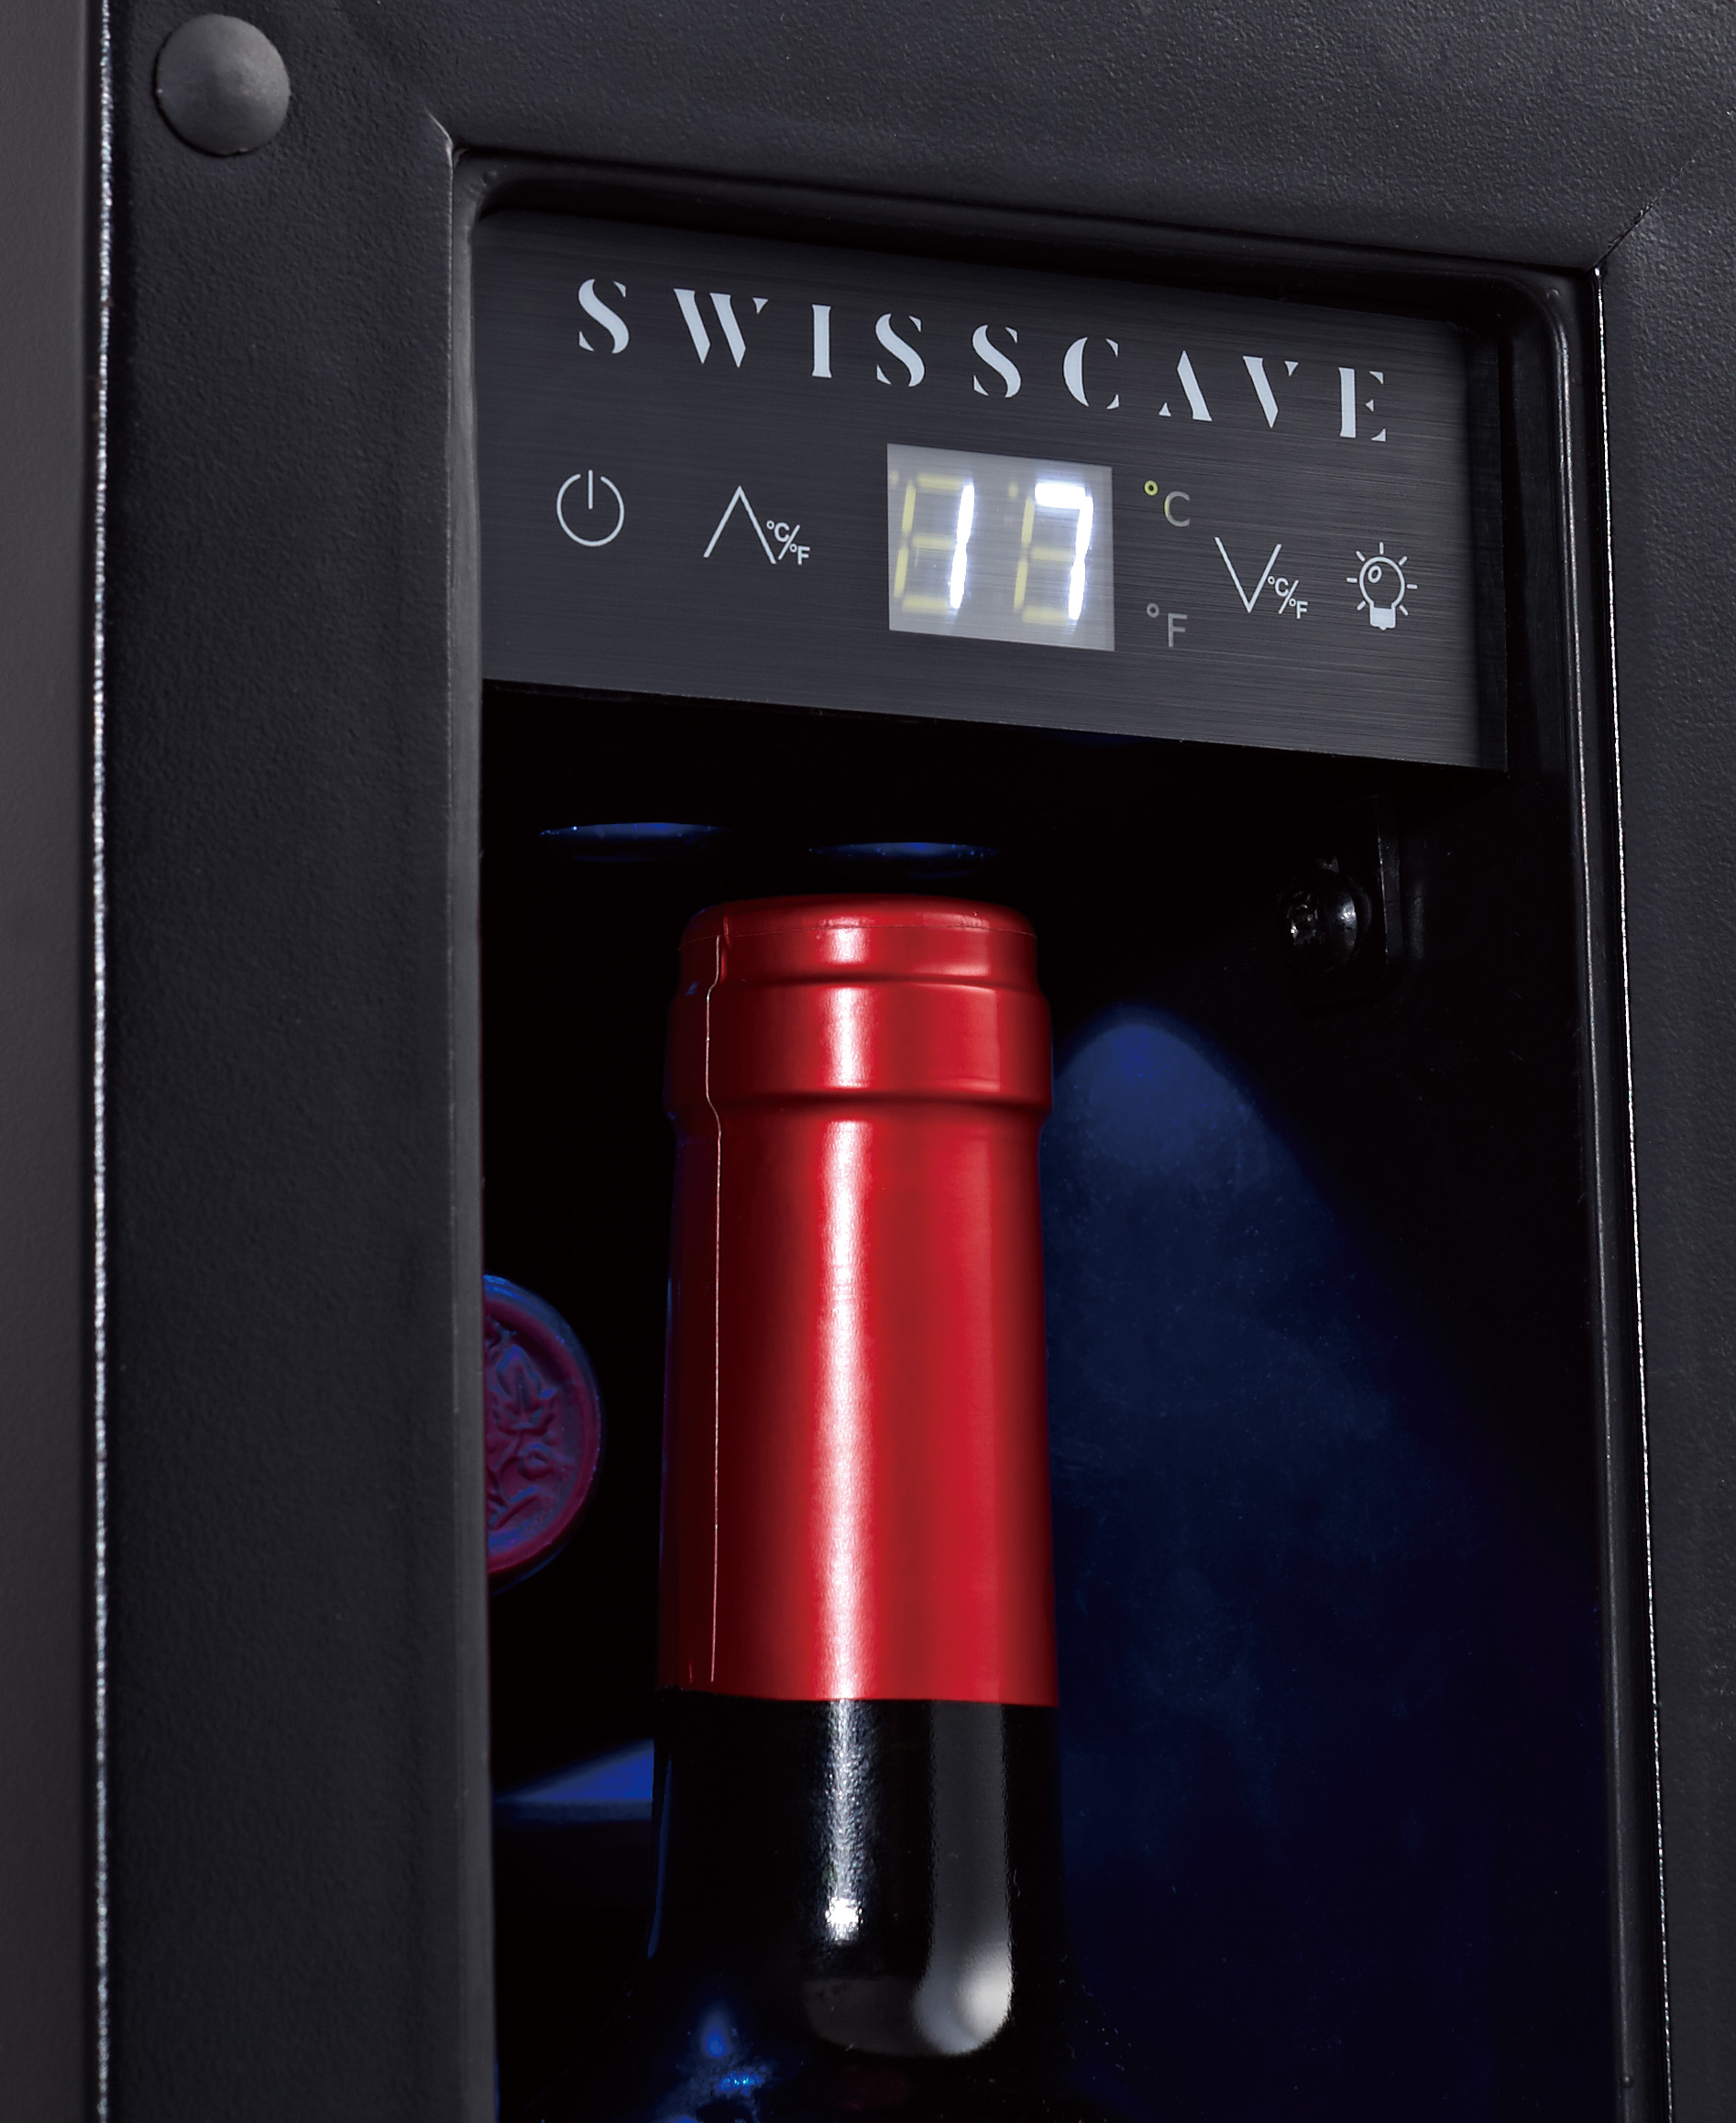 Swisscave WL30F